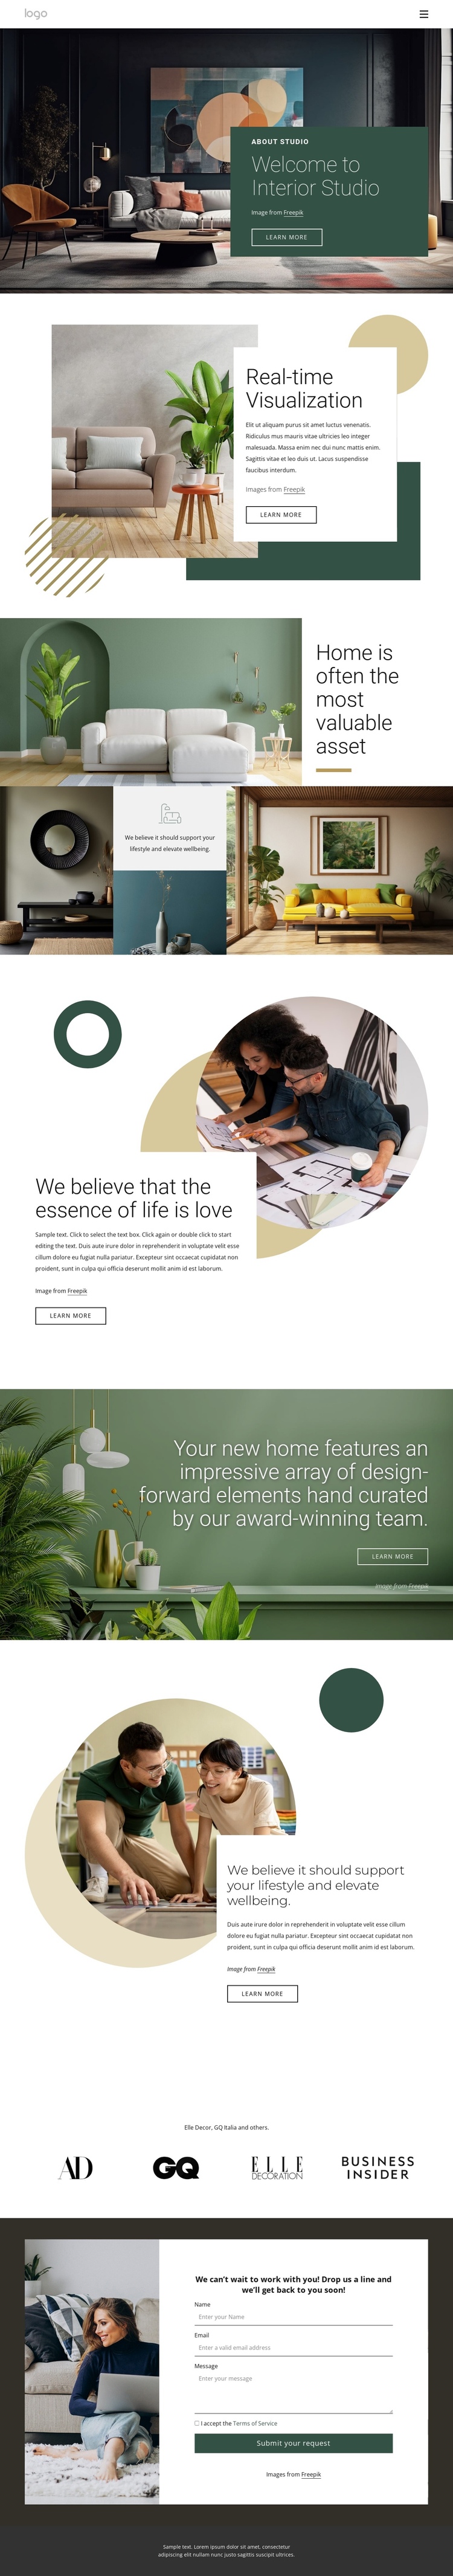 Award-winning interior design studio One Page Template